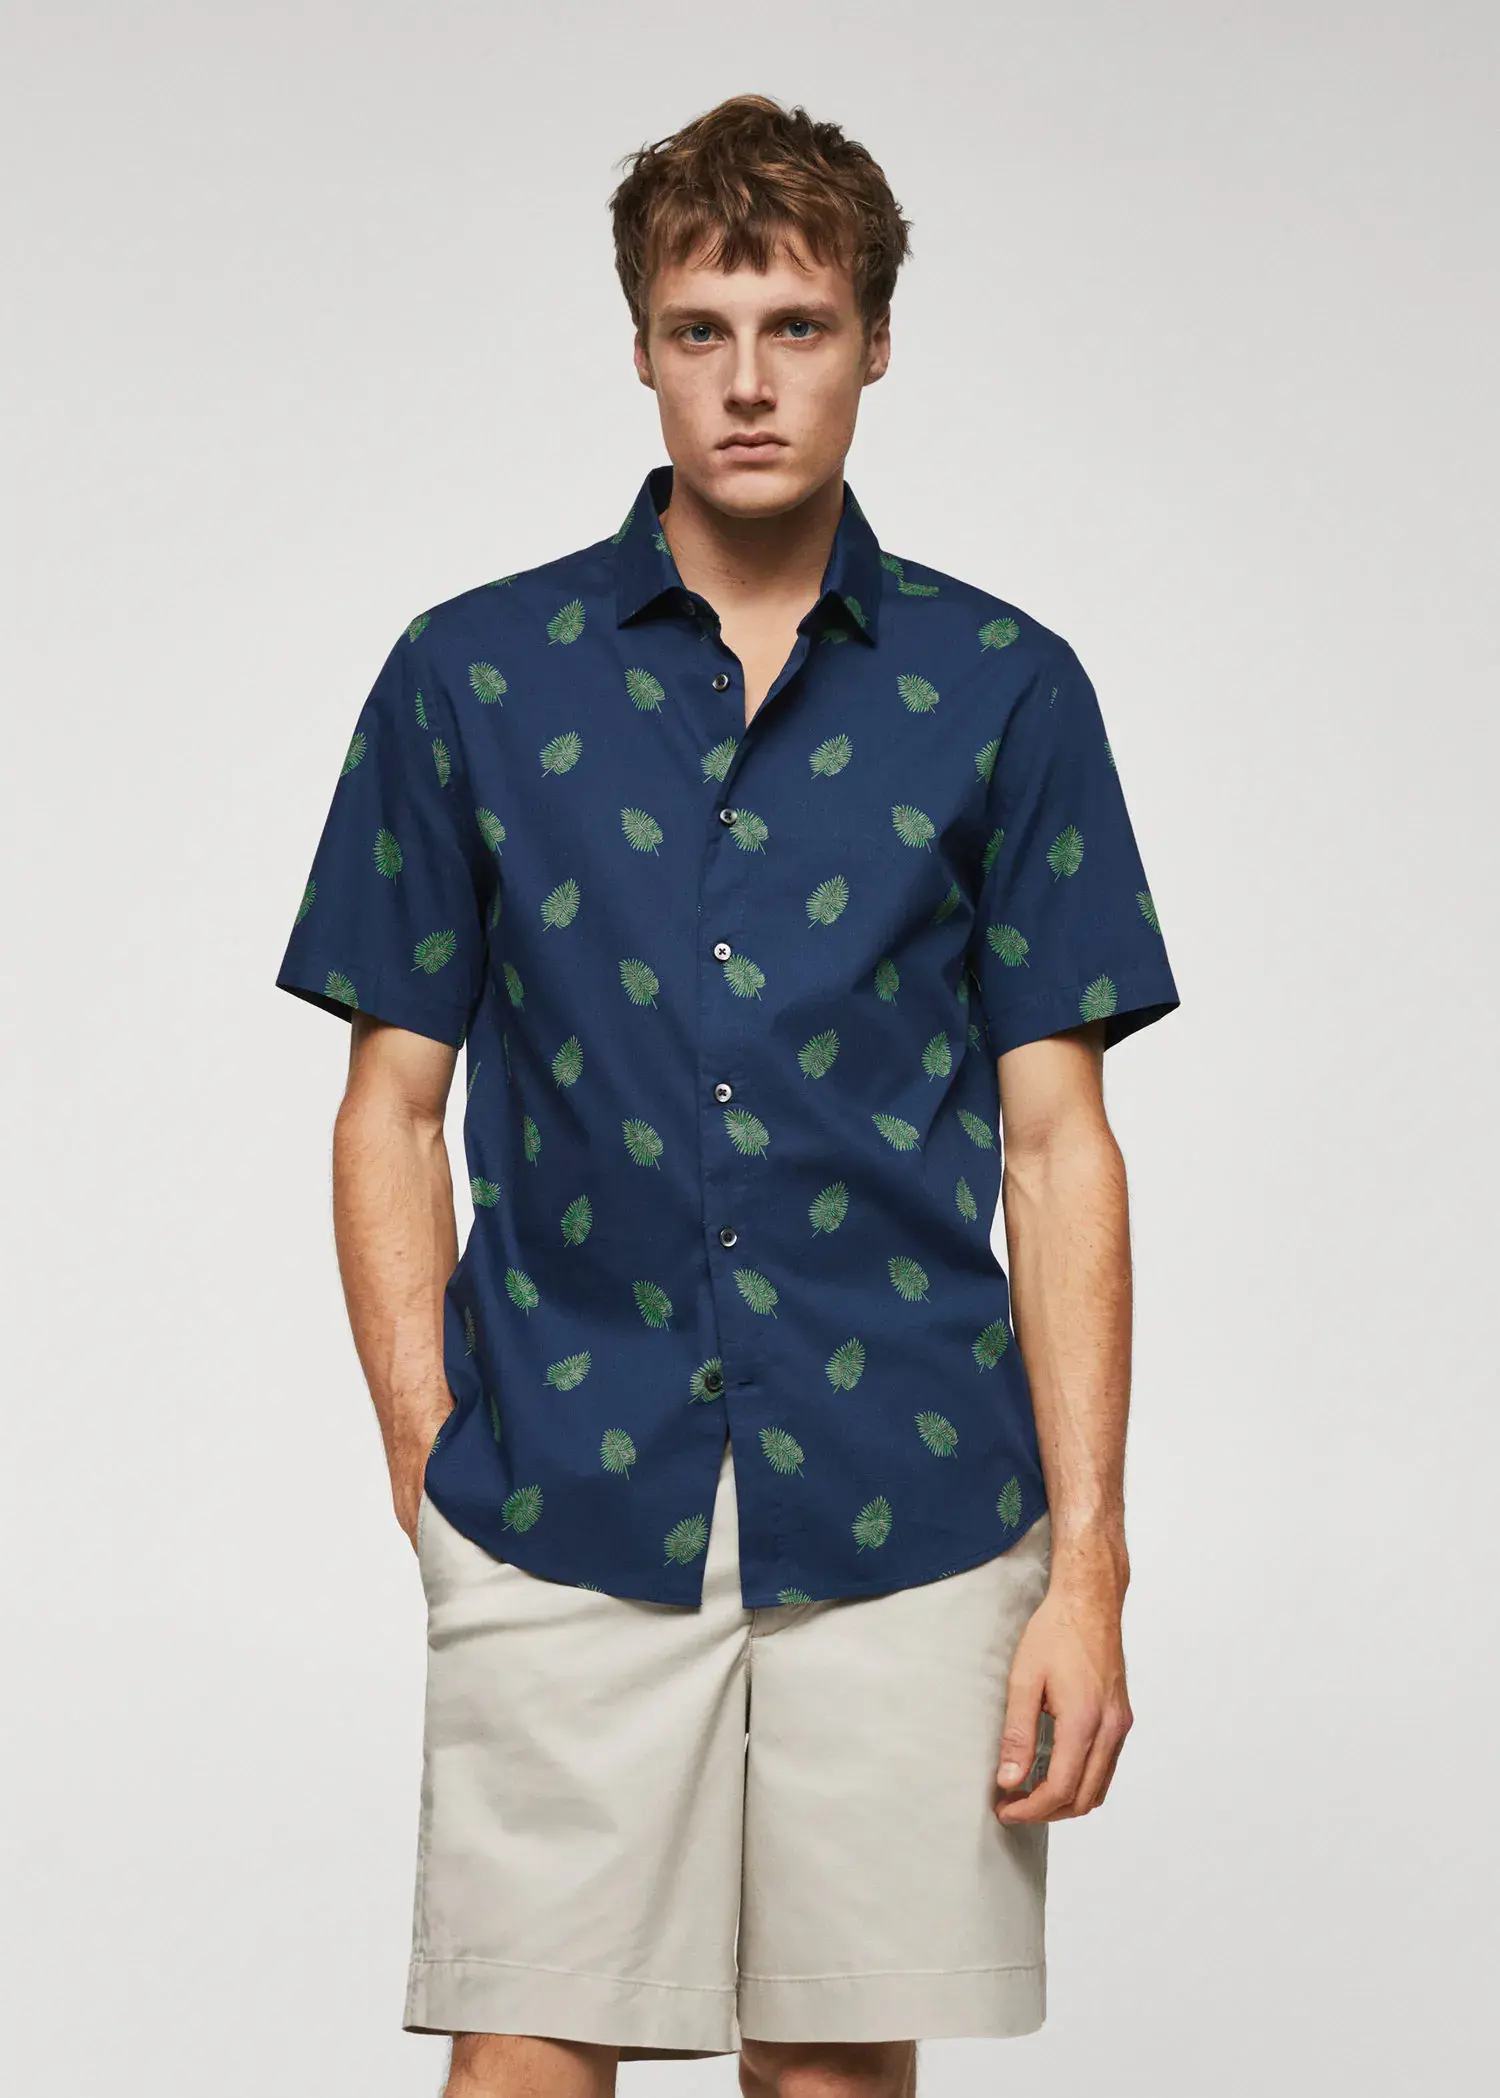 Mango 100% cotton short-sleeved printed shirt. 1